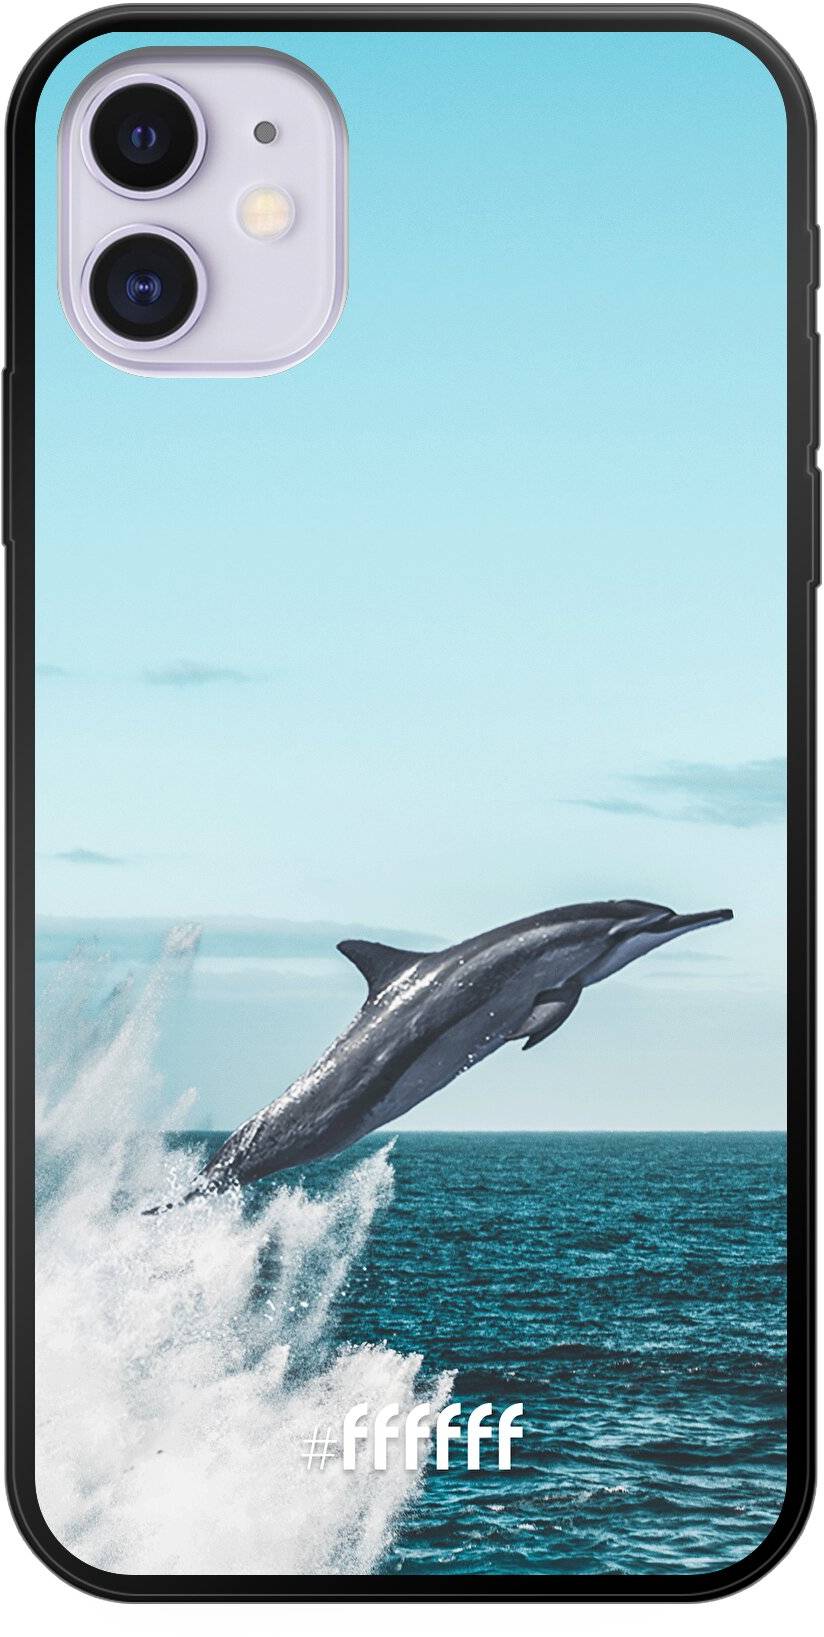 Dolphin iPhone 11